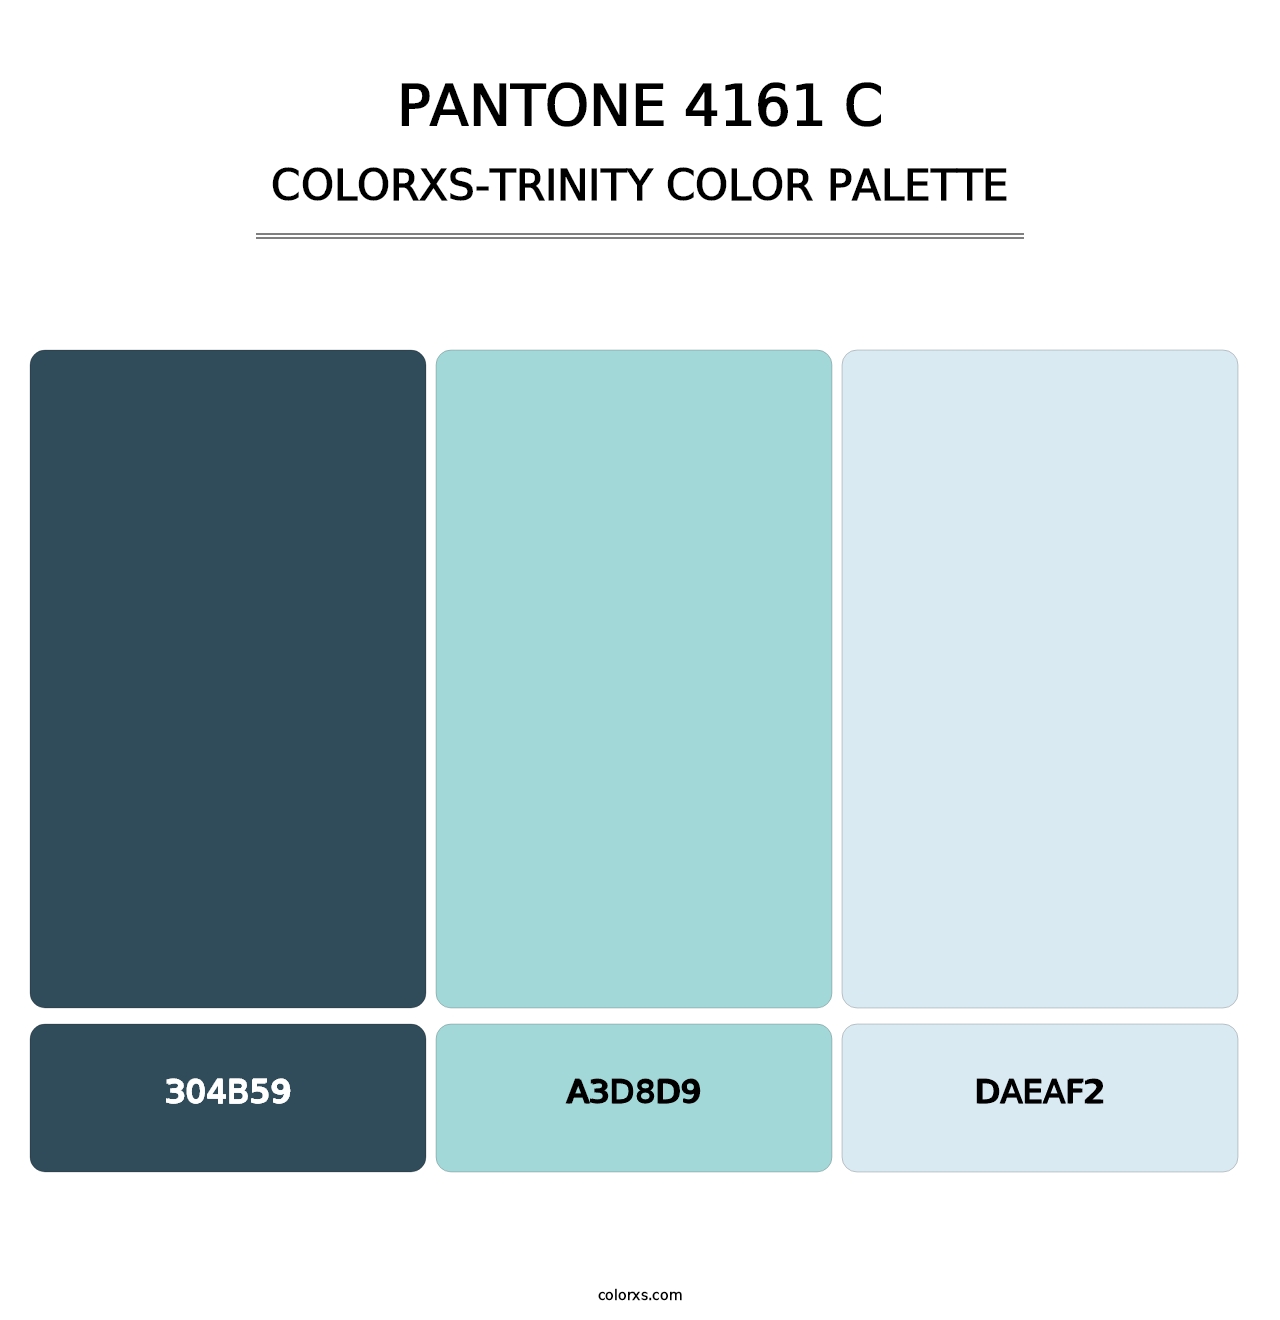 PANTONE 4161 C - Colorxs Trinity Palette